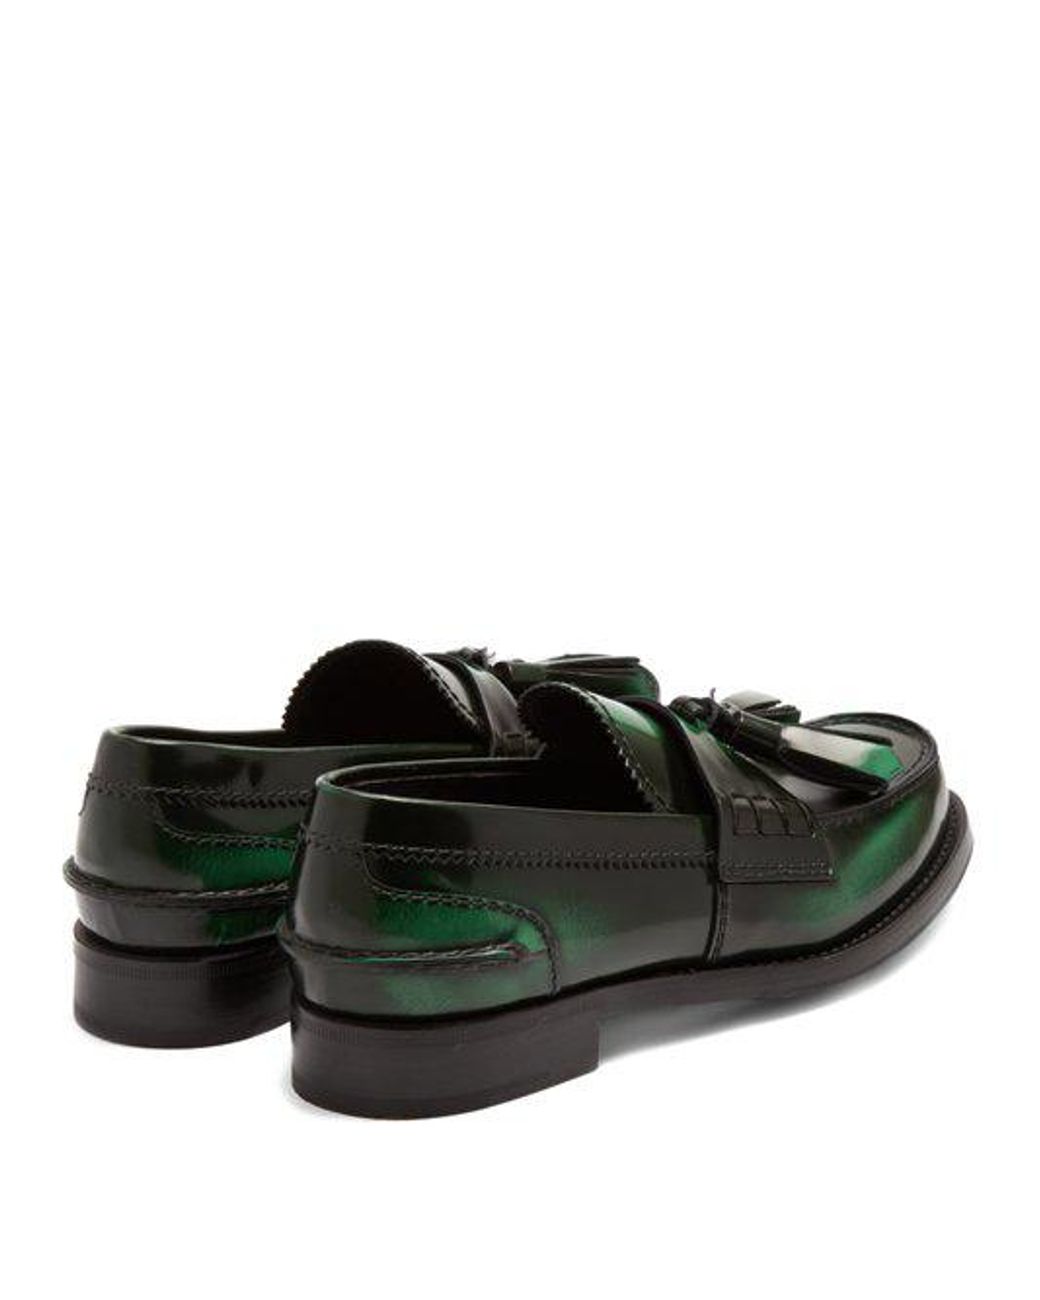 Prada Tassel Leather Loafers in Green | Lyst